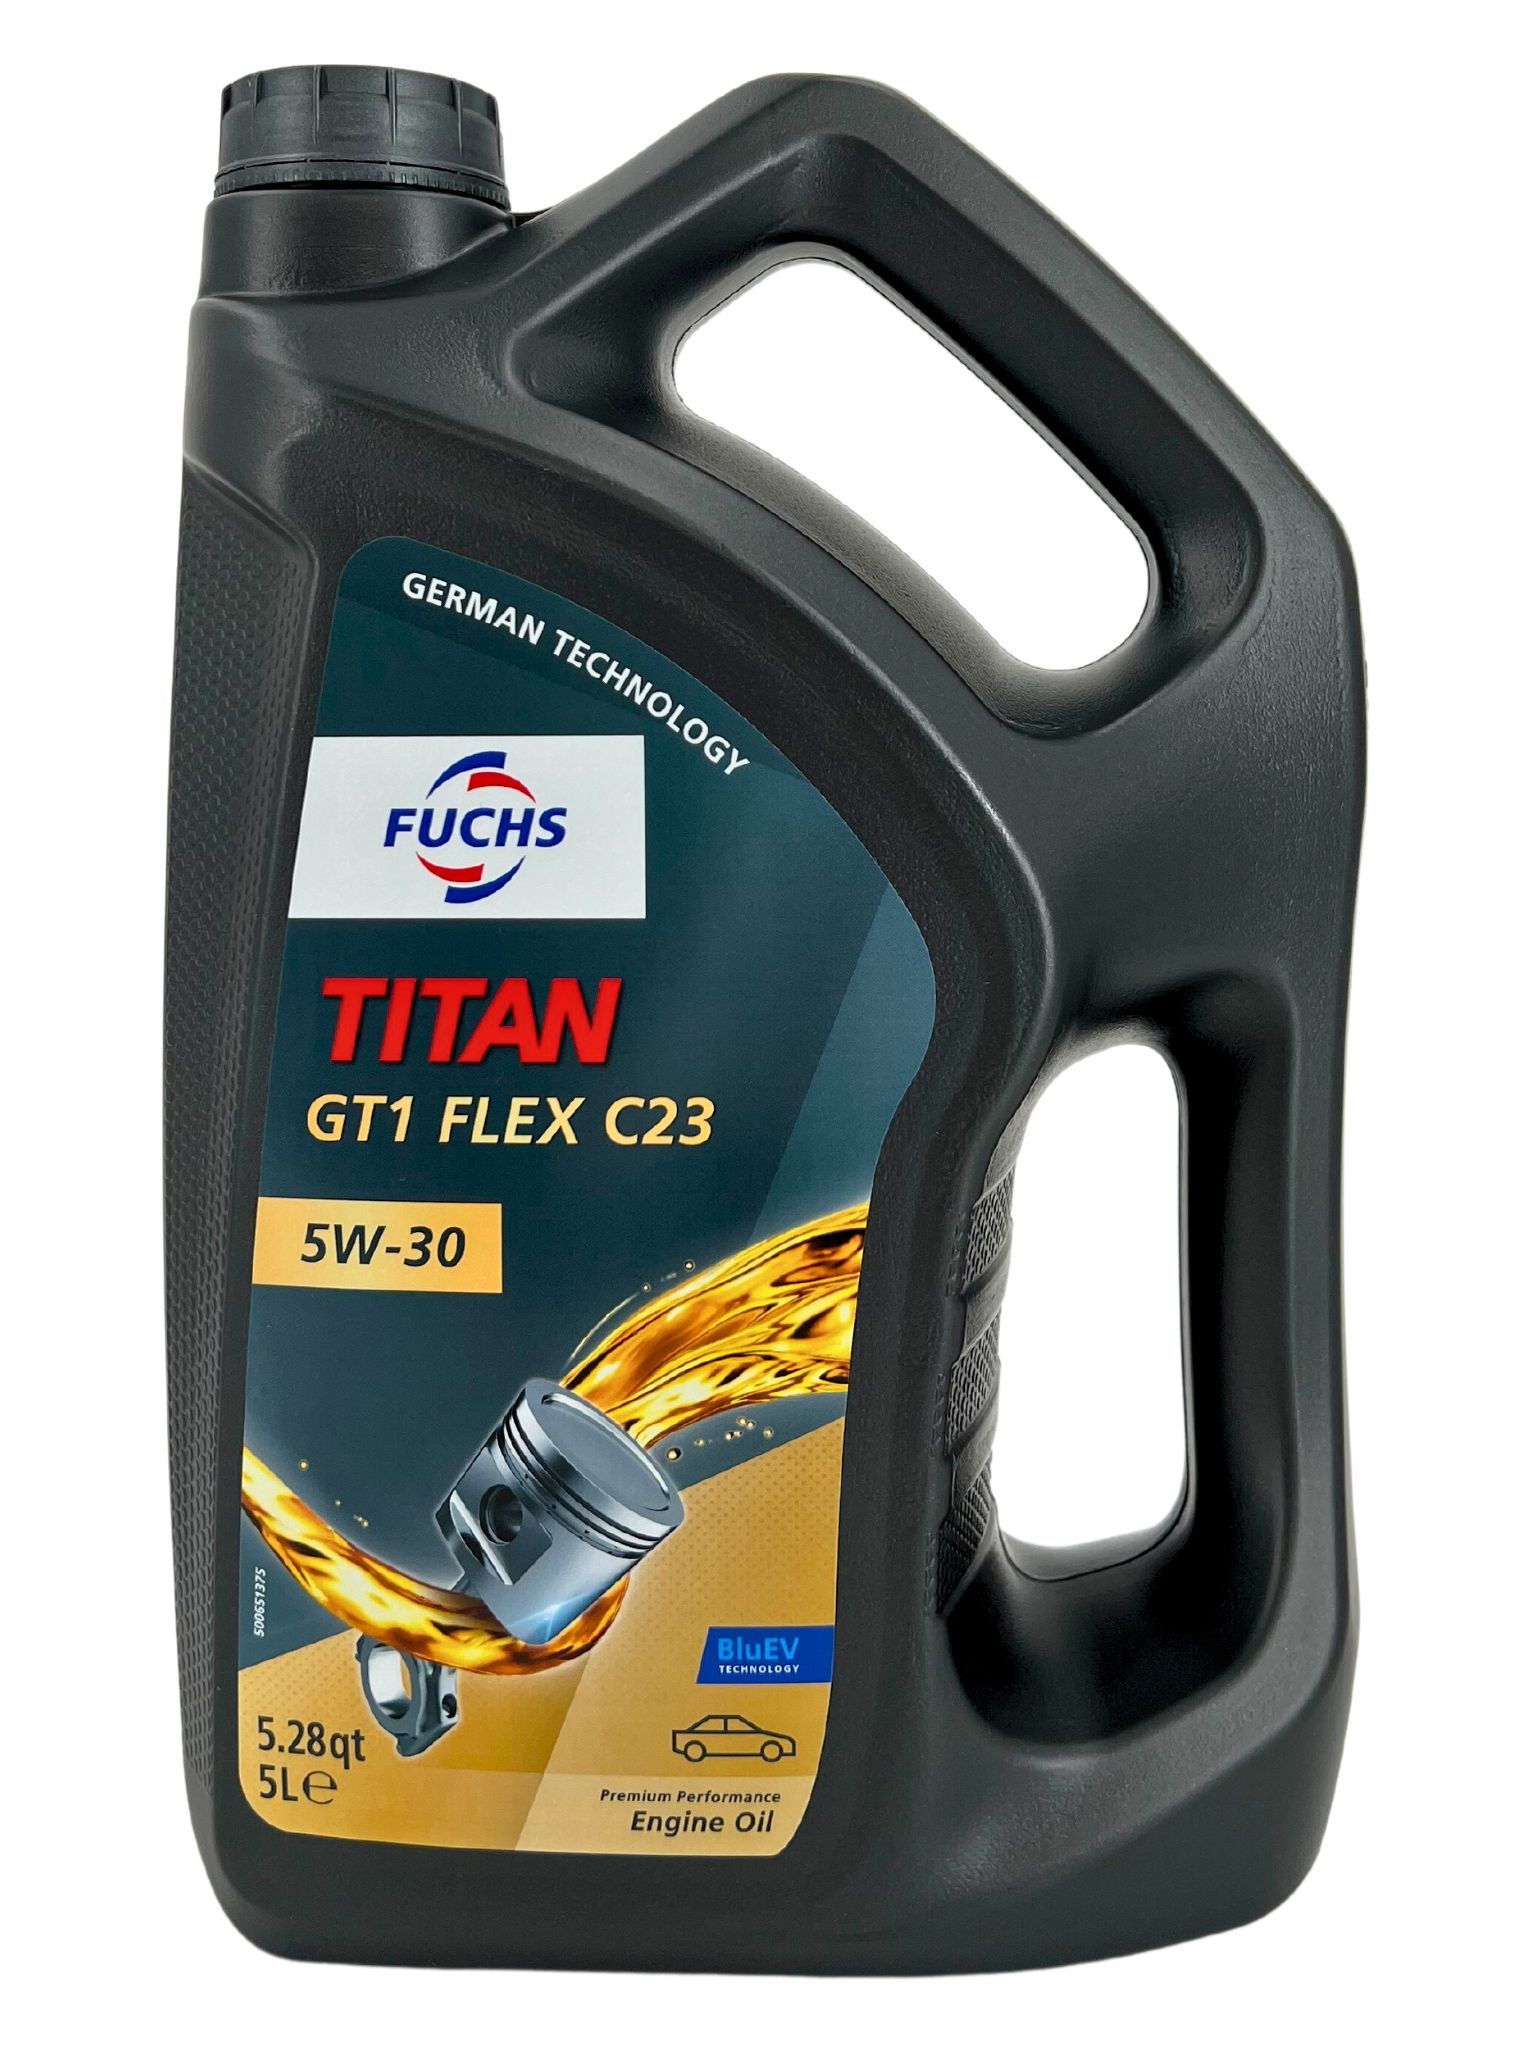 Fuchs Titan GT1 Flex C23 5W-30 5 Liter